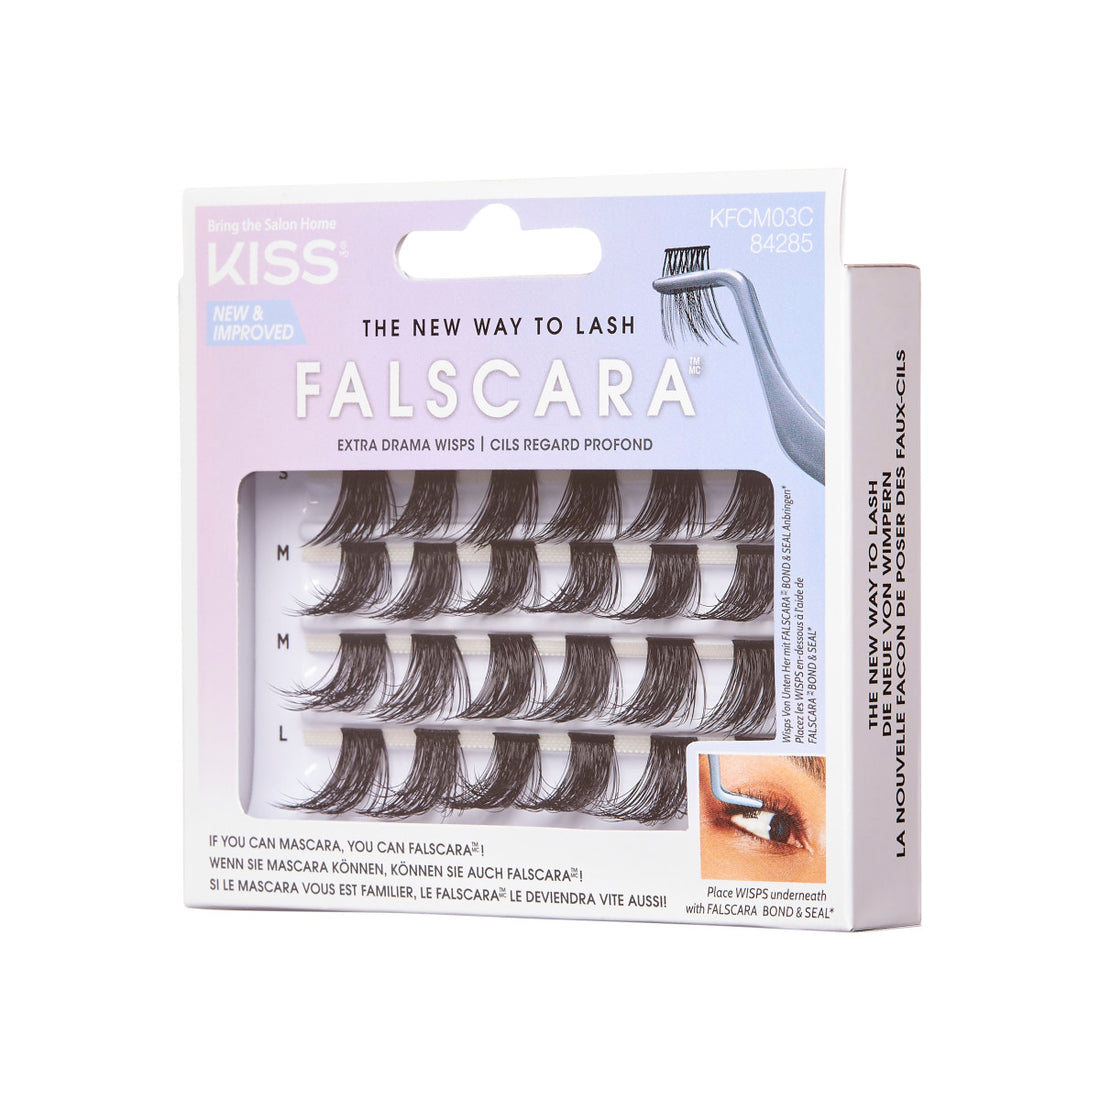 KISS FALSCARA Collection DIY Eyelash Extensions Multi Pack, Extra Drama Wisps, 24 ks